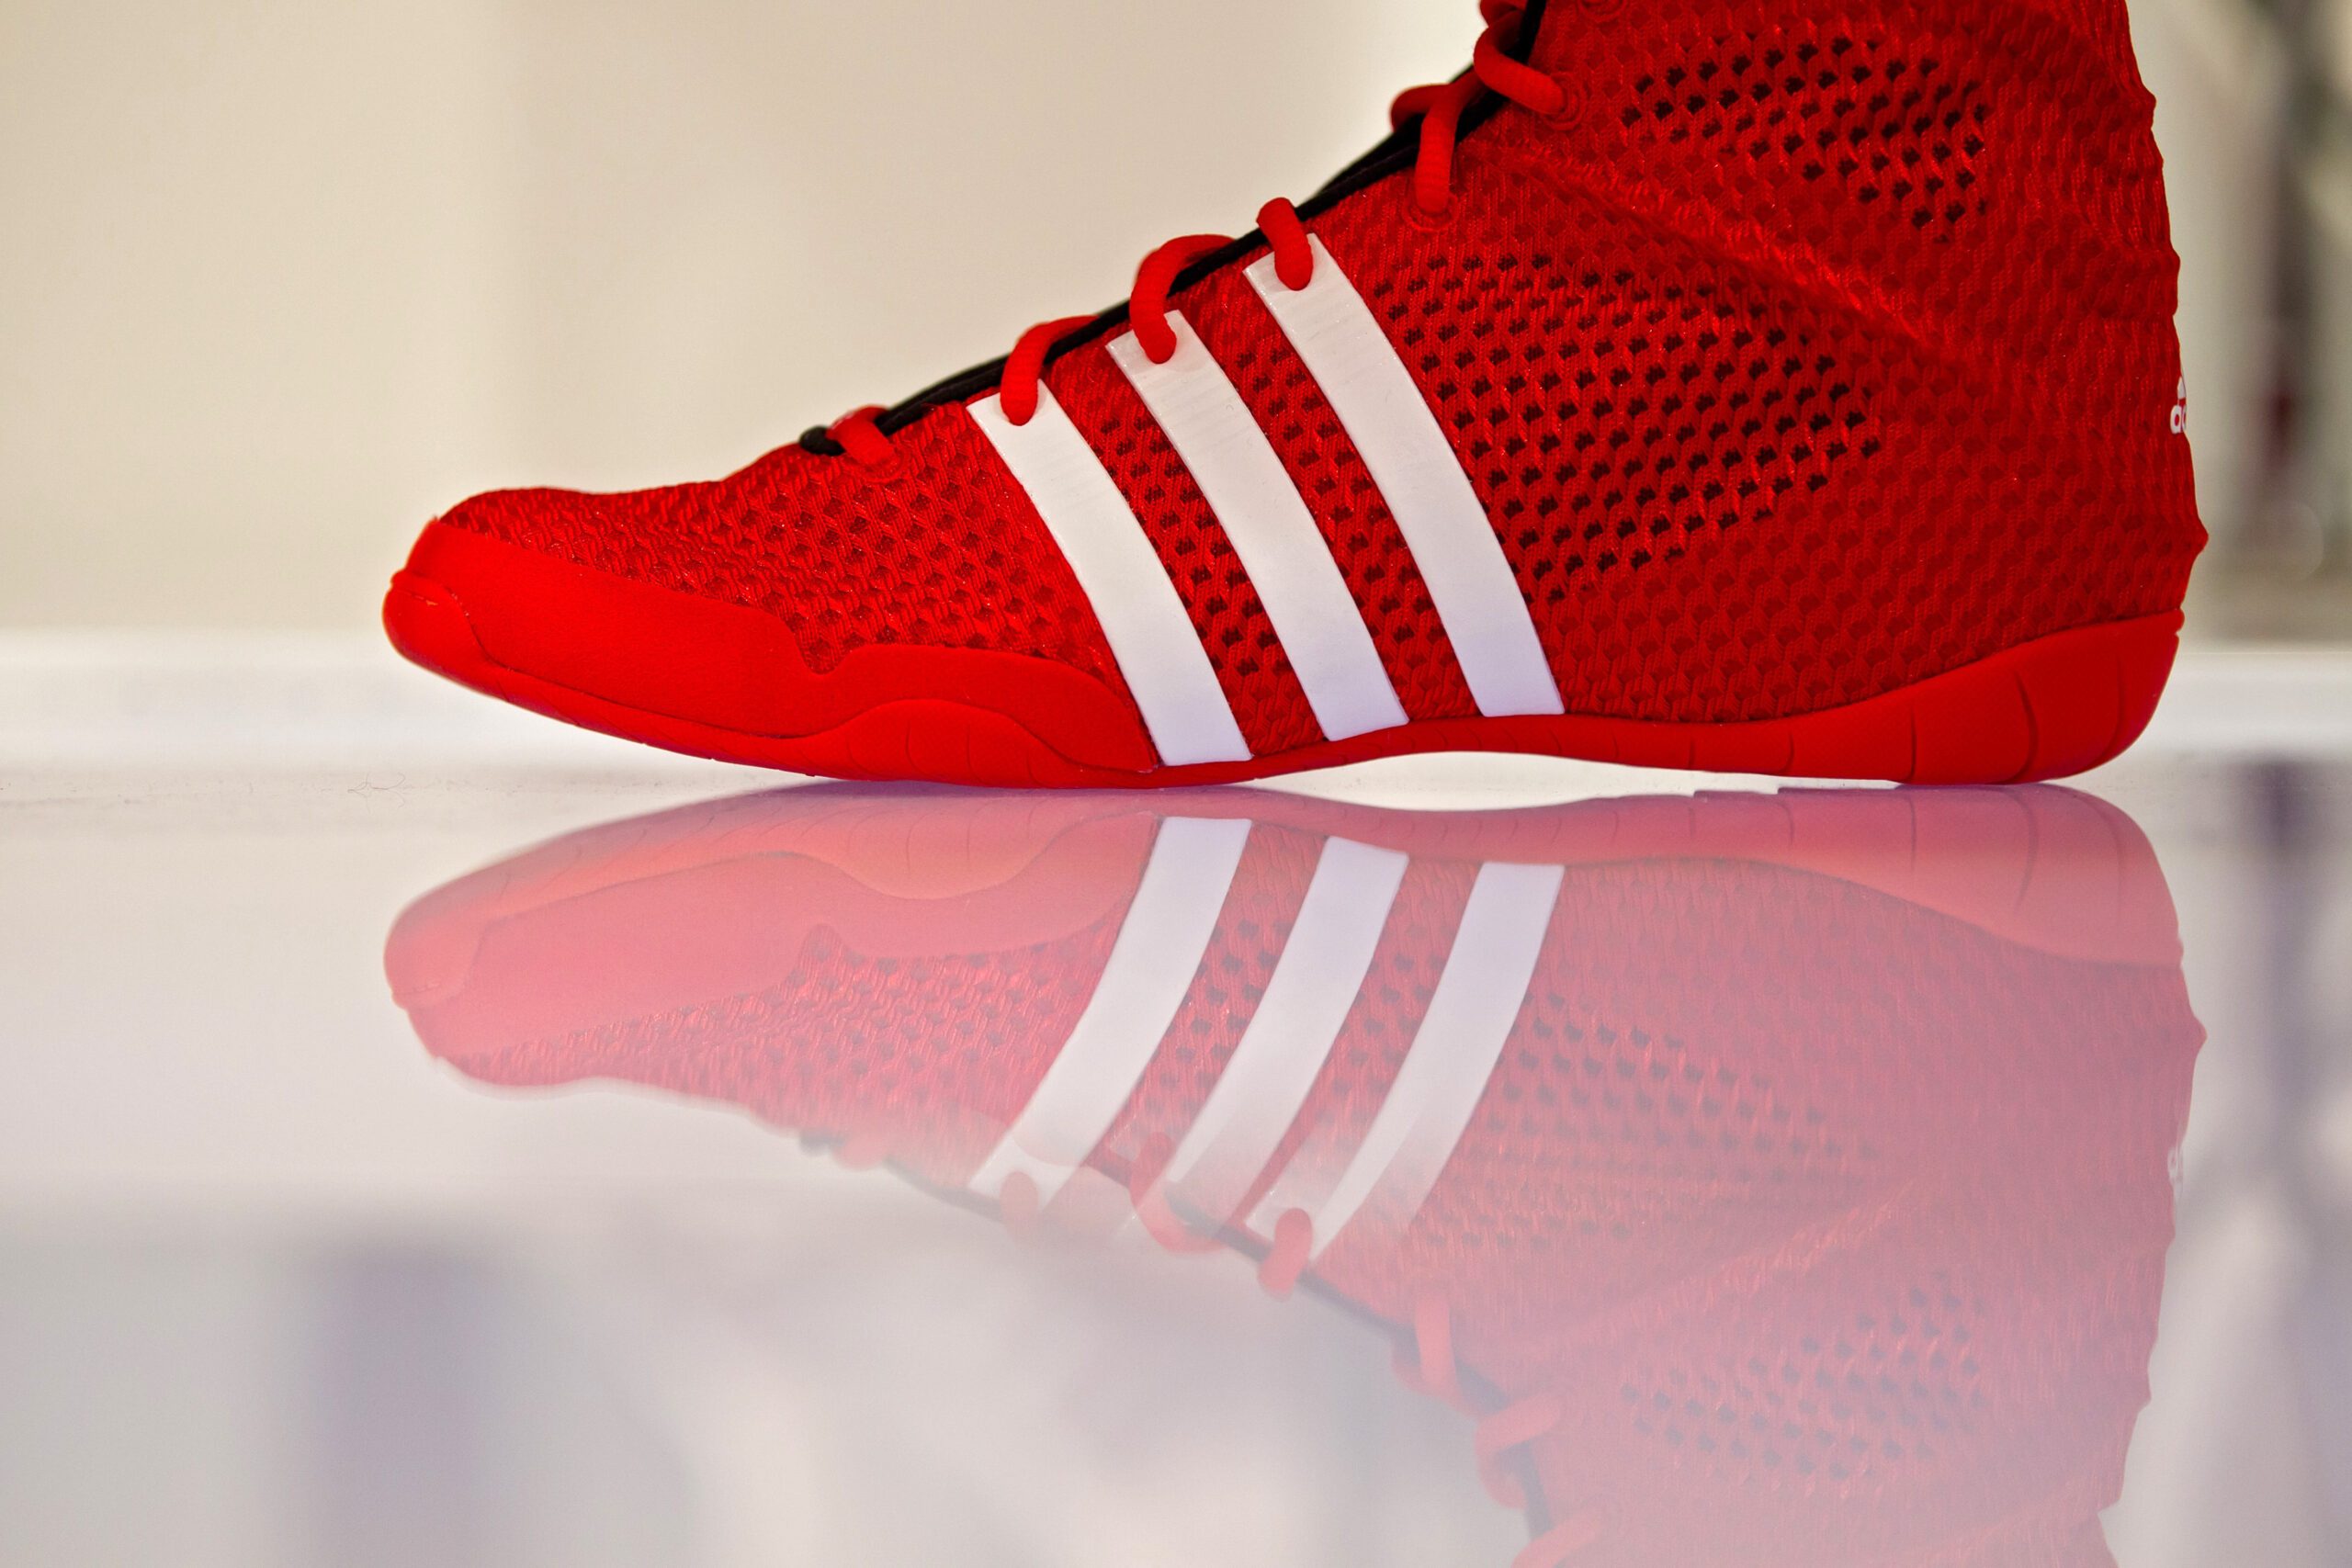 Adidas wins EU ruling on famous ‘3 stripes’ design